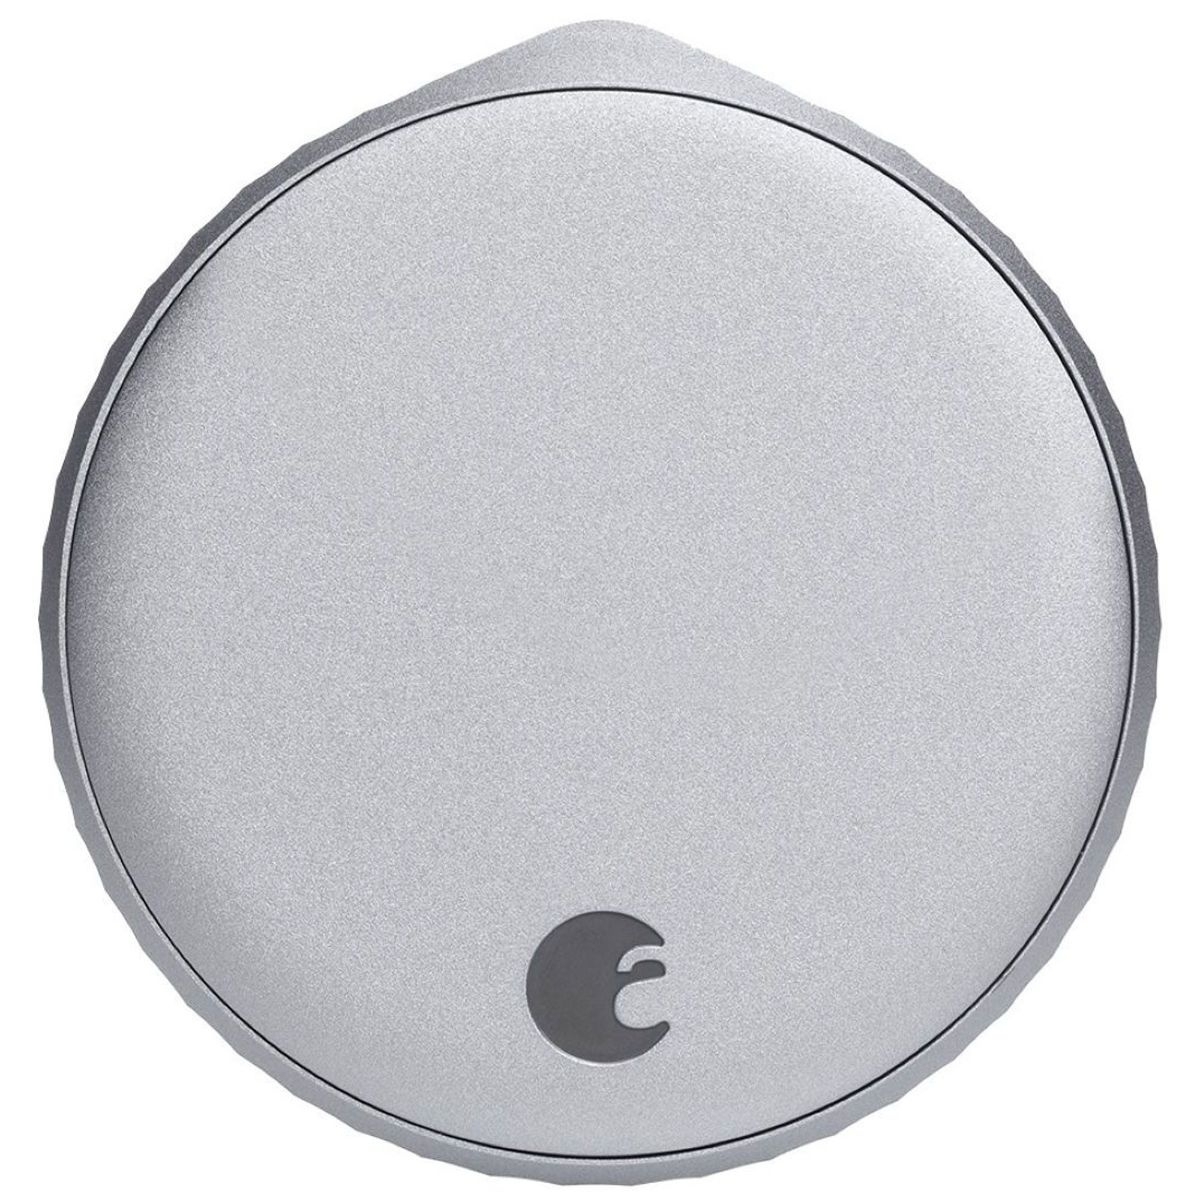 August Smart Lock 2nd Generation HomeKit Enabled Silver  (AUG-SL02-M02-S02) (Refurbished)